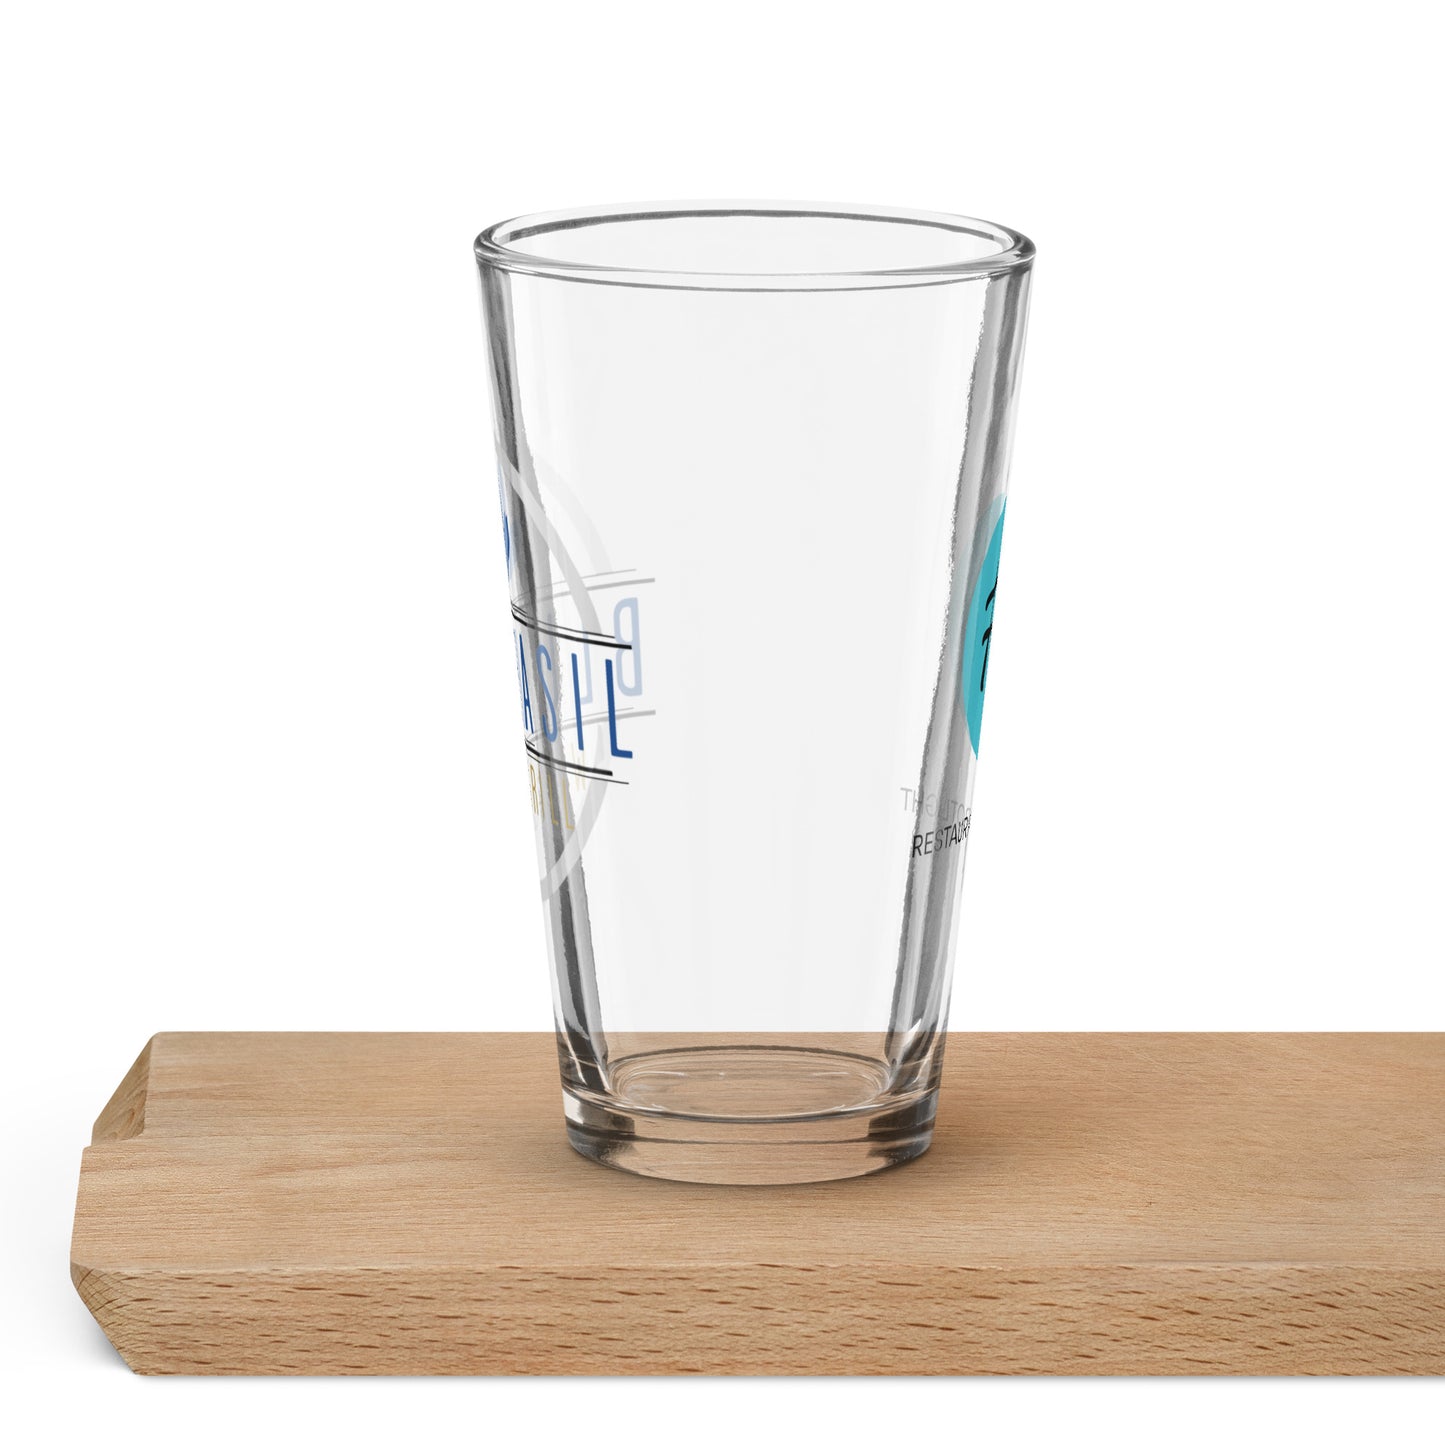 Blu Basil Shaker pint glass